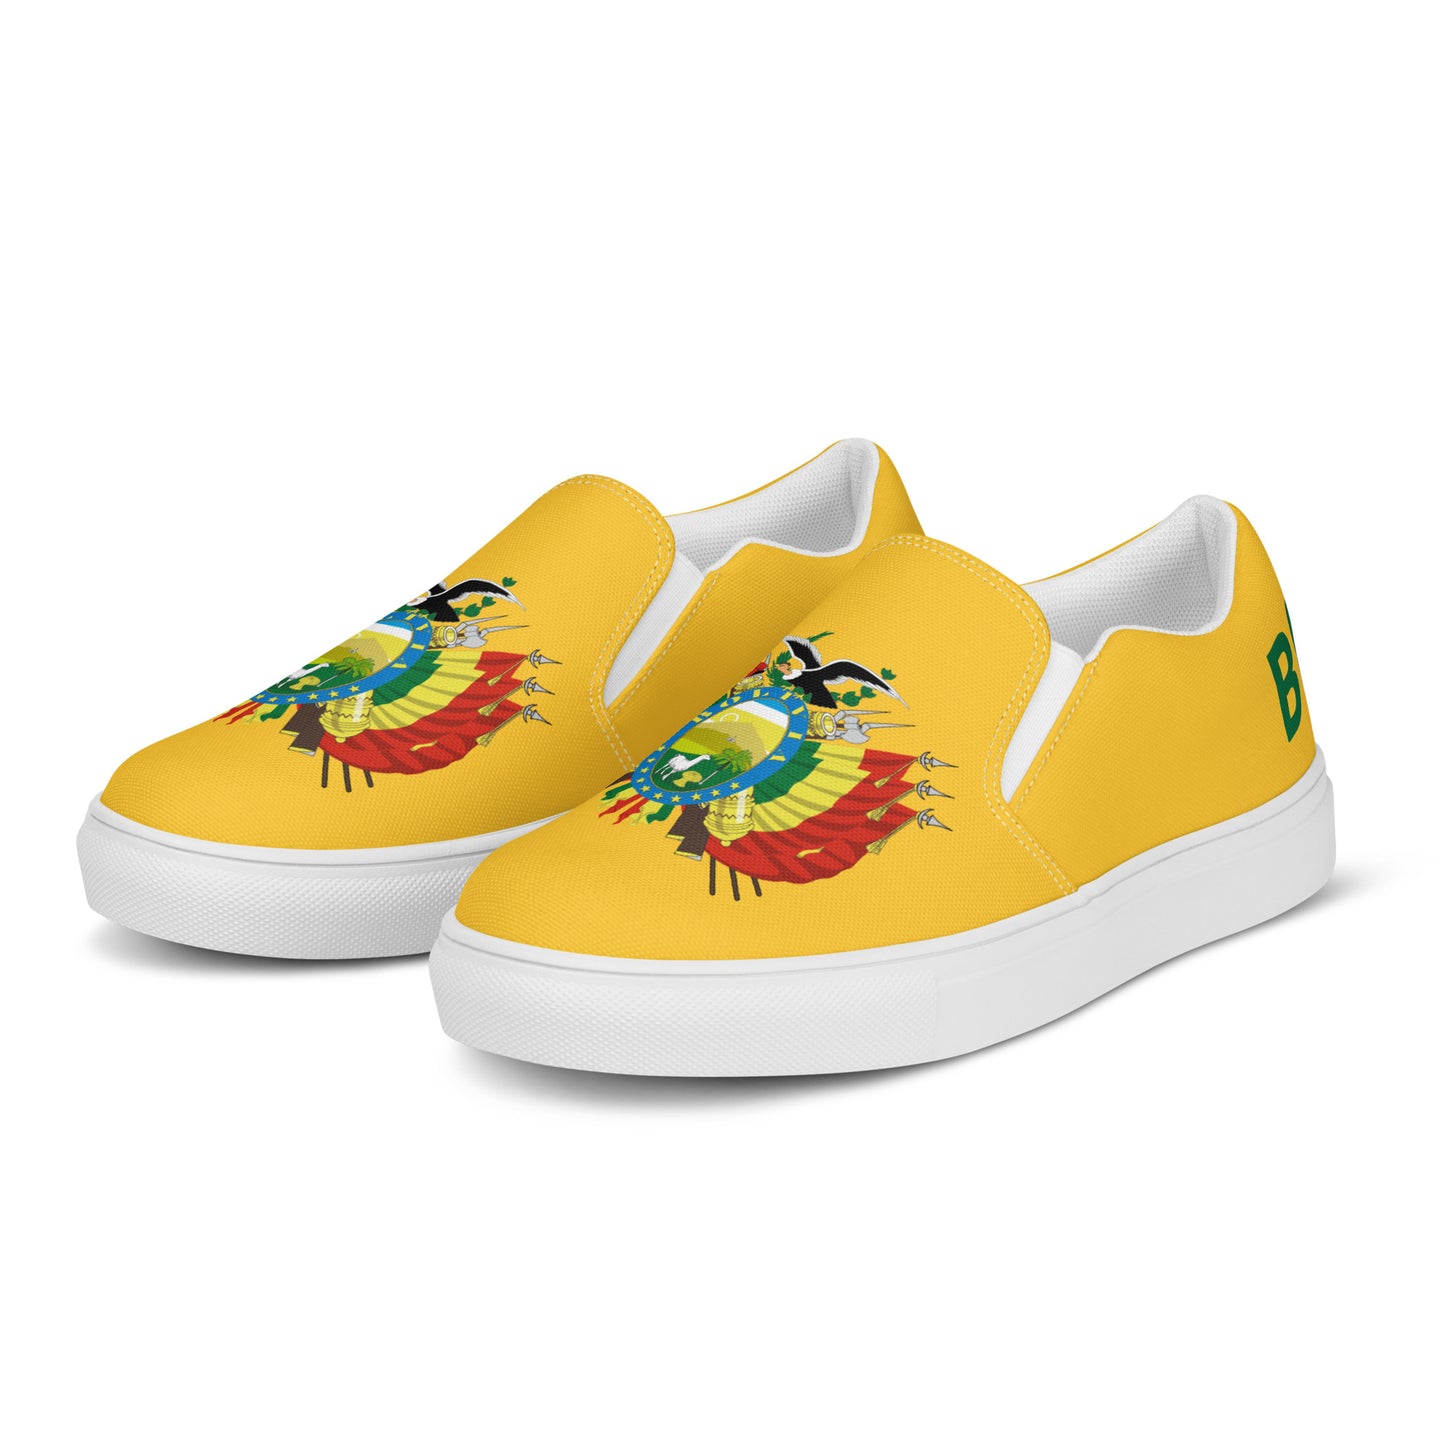 Bolivia - Women - Yellow - Slip-on shoes